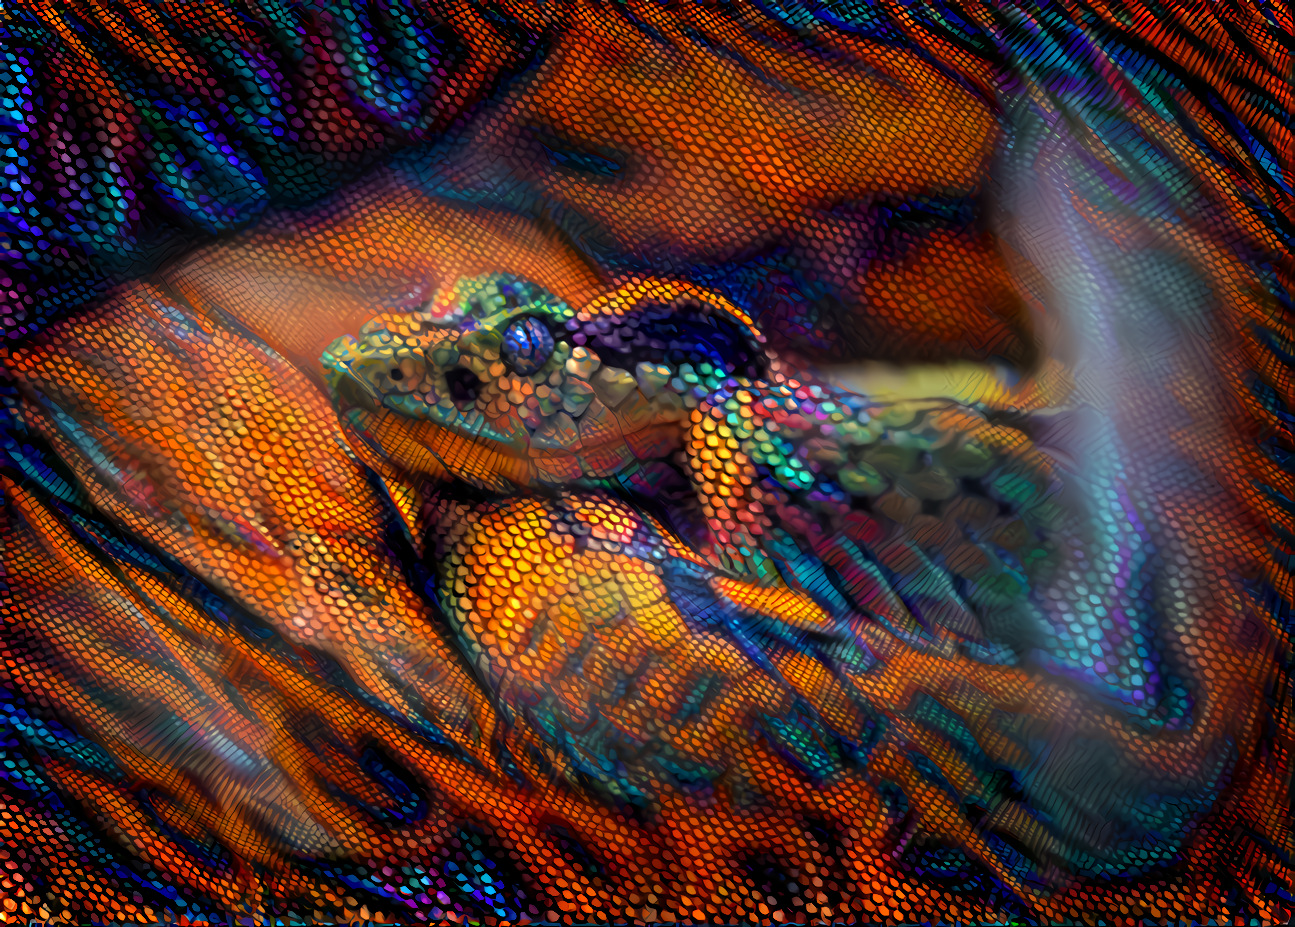 Russet Speckled Viper